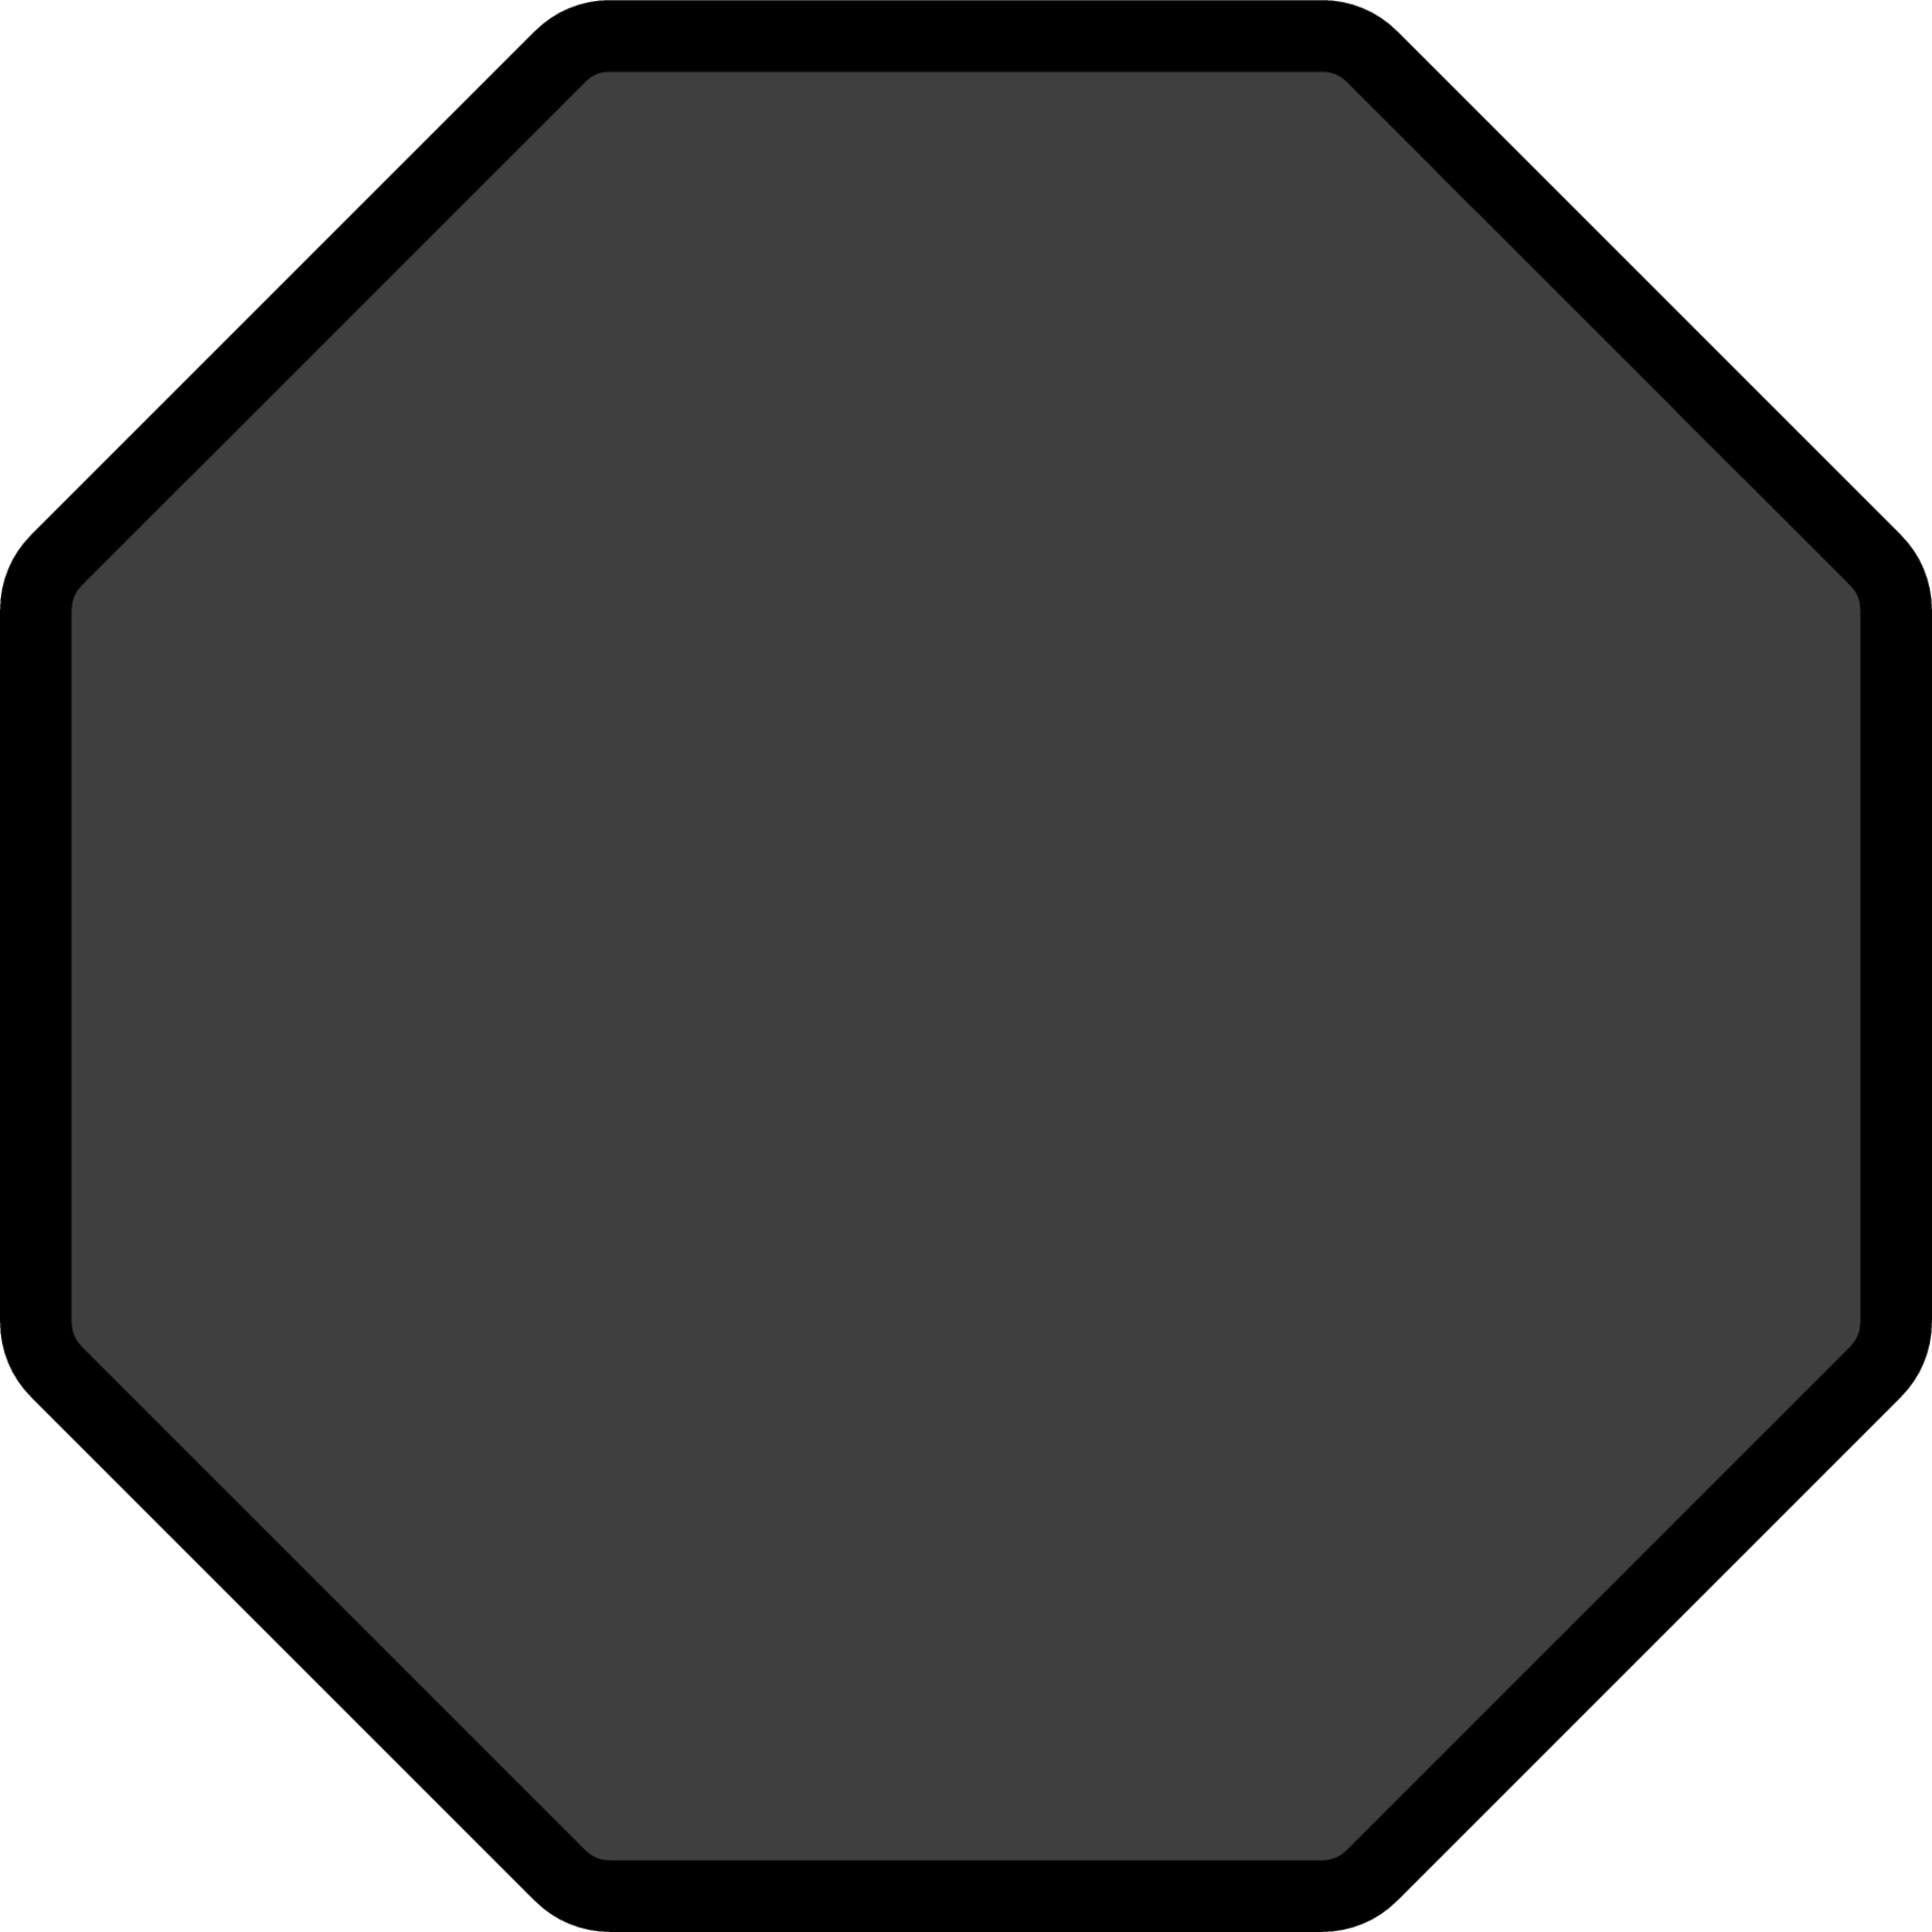 horizontal black octagon emoji